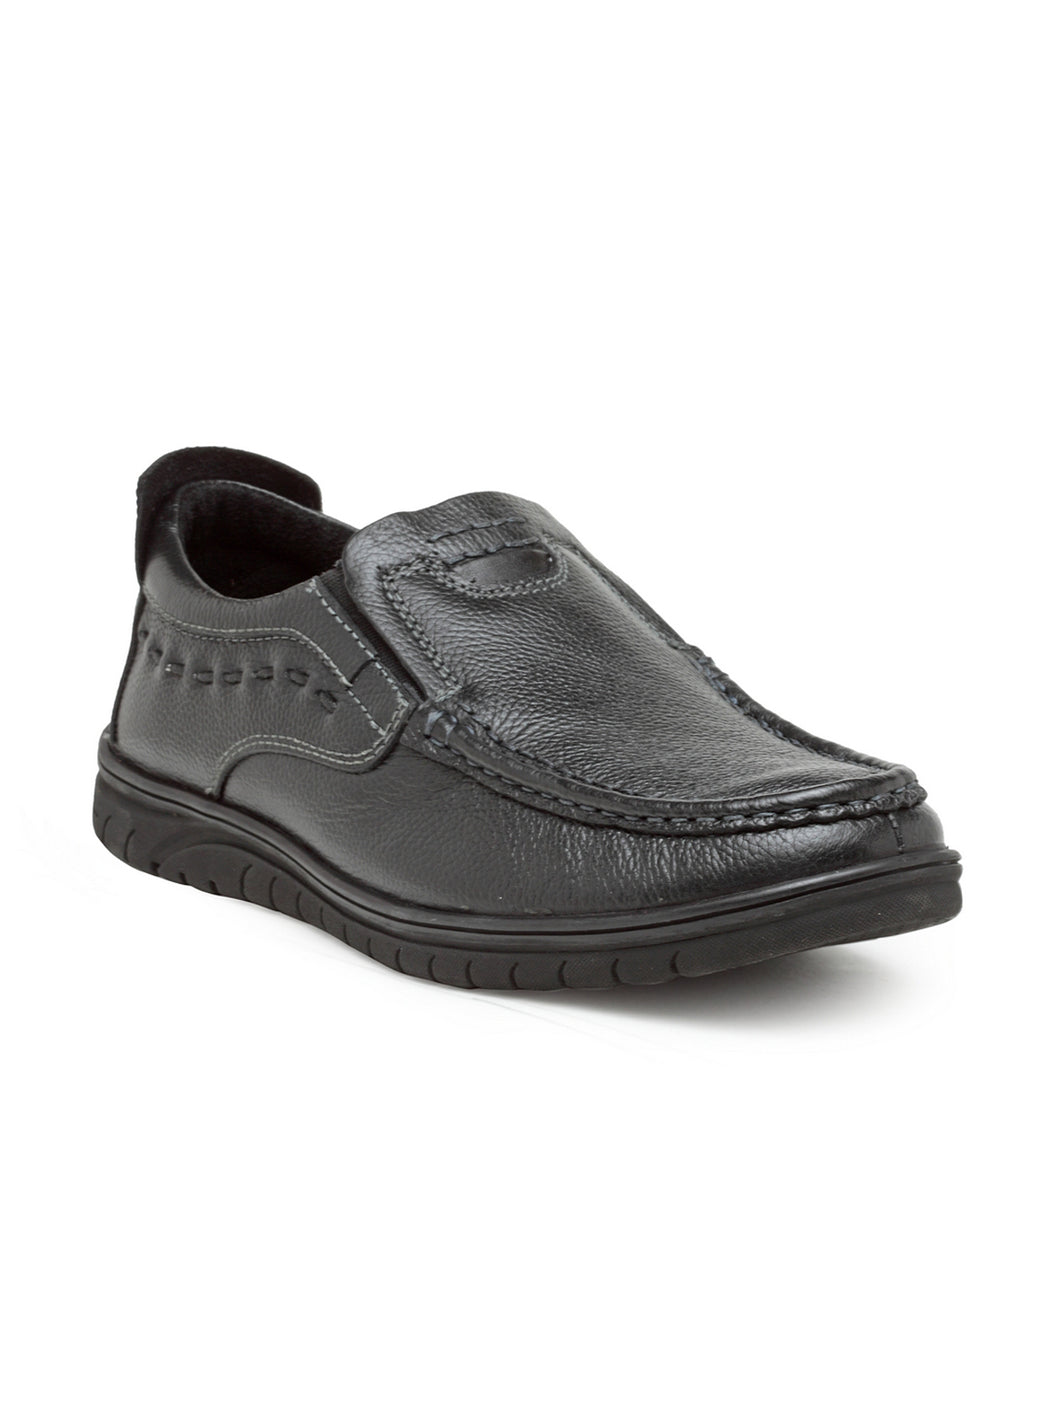 Teakwood Leathers Men's Black Casual Slip-On Shoes